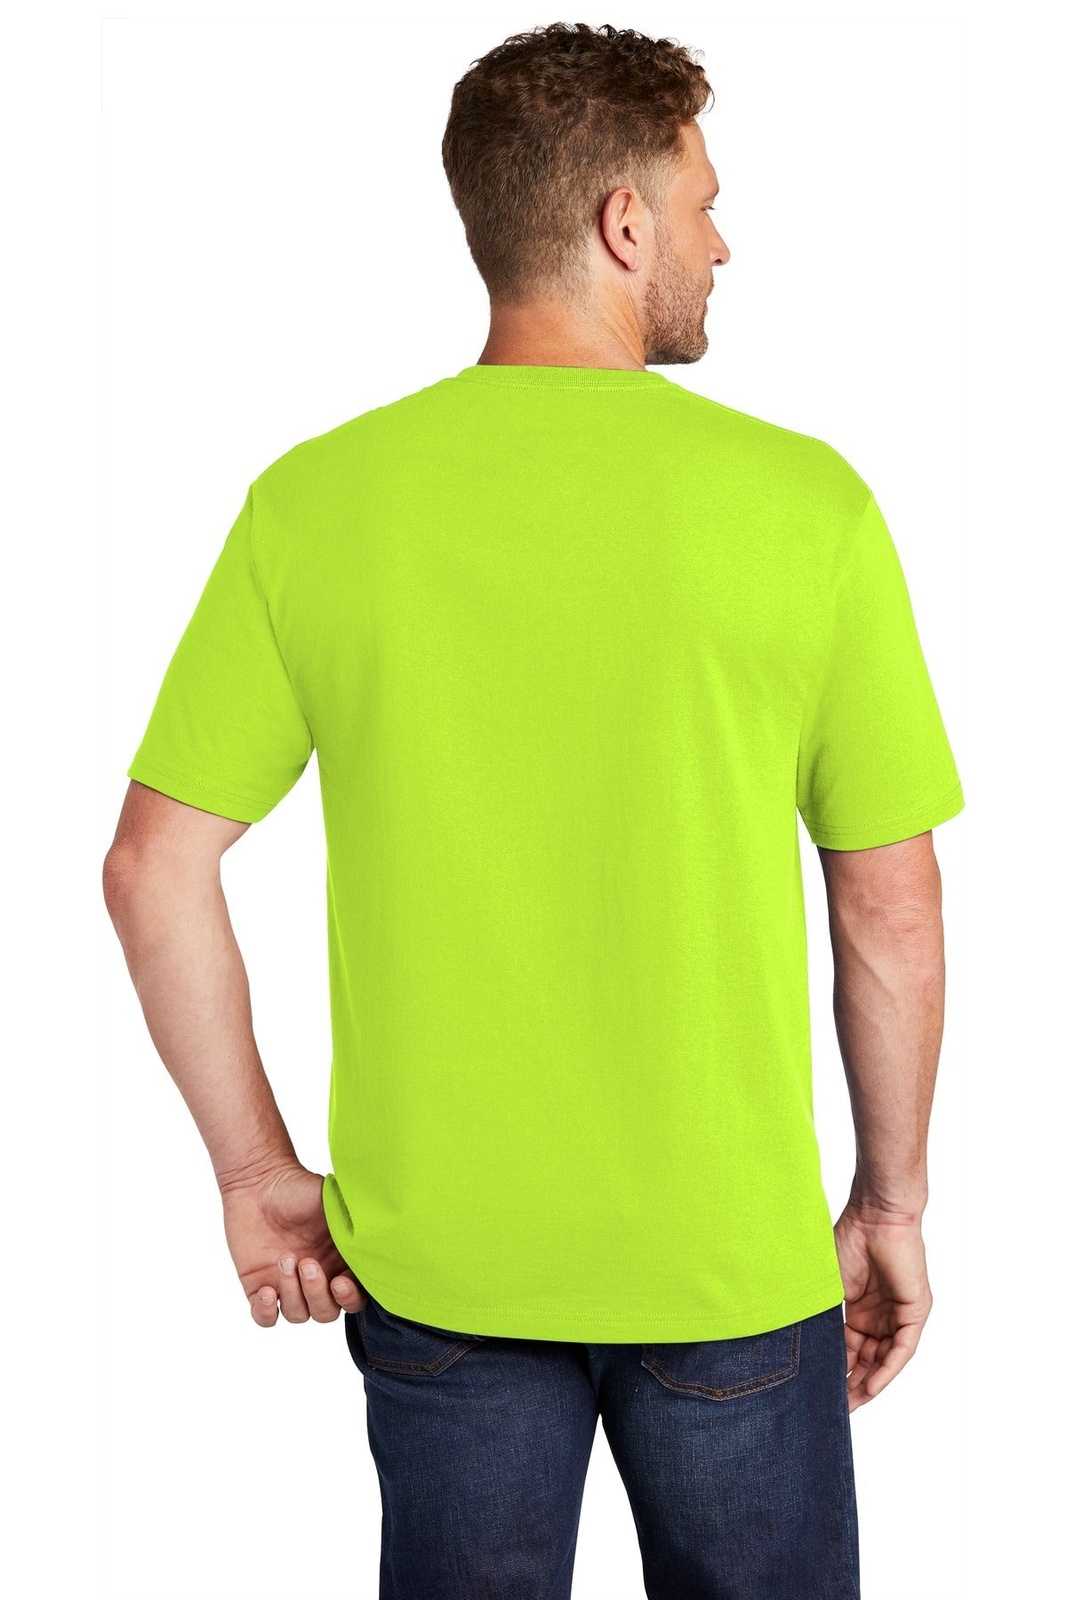 CornerStone CS430 Workwear Pocket Tee - Safety Green - HIT a Double - 2